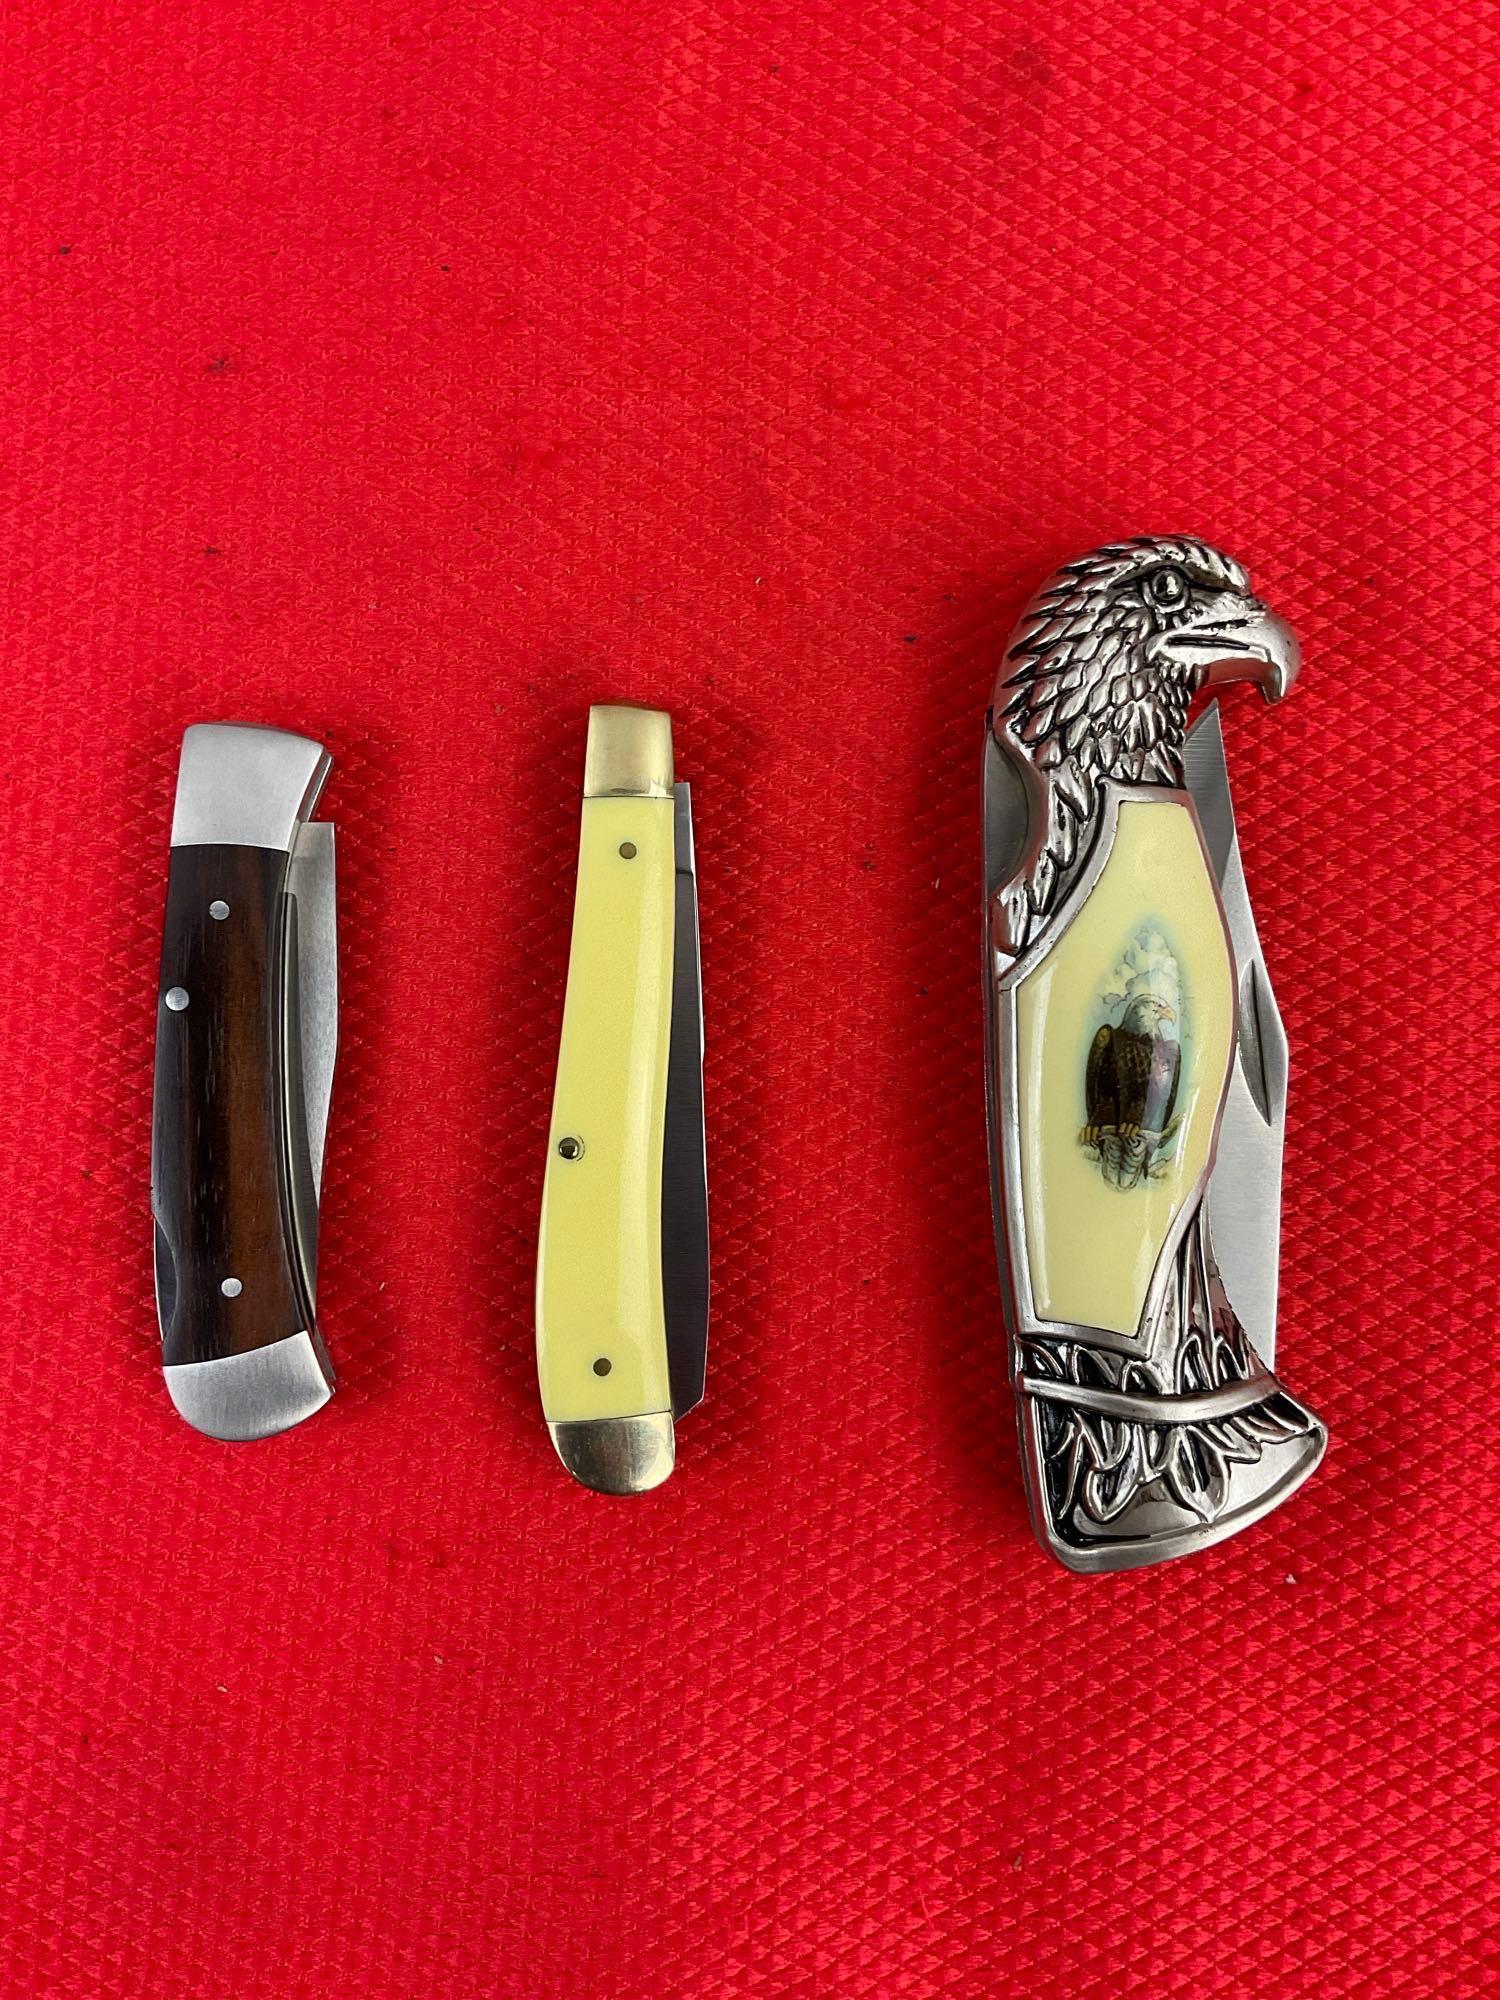 3 pcs Modern Steel Folding Blade Pocket Knives. 1 Schrade, 1 Lone Wolf, 1 Rite Edge. NIB. See pics.